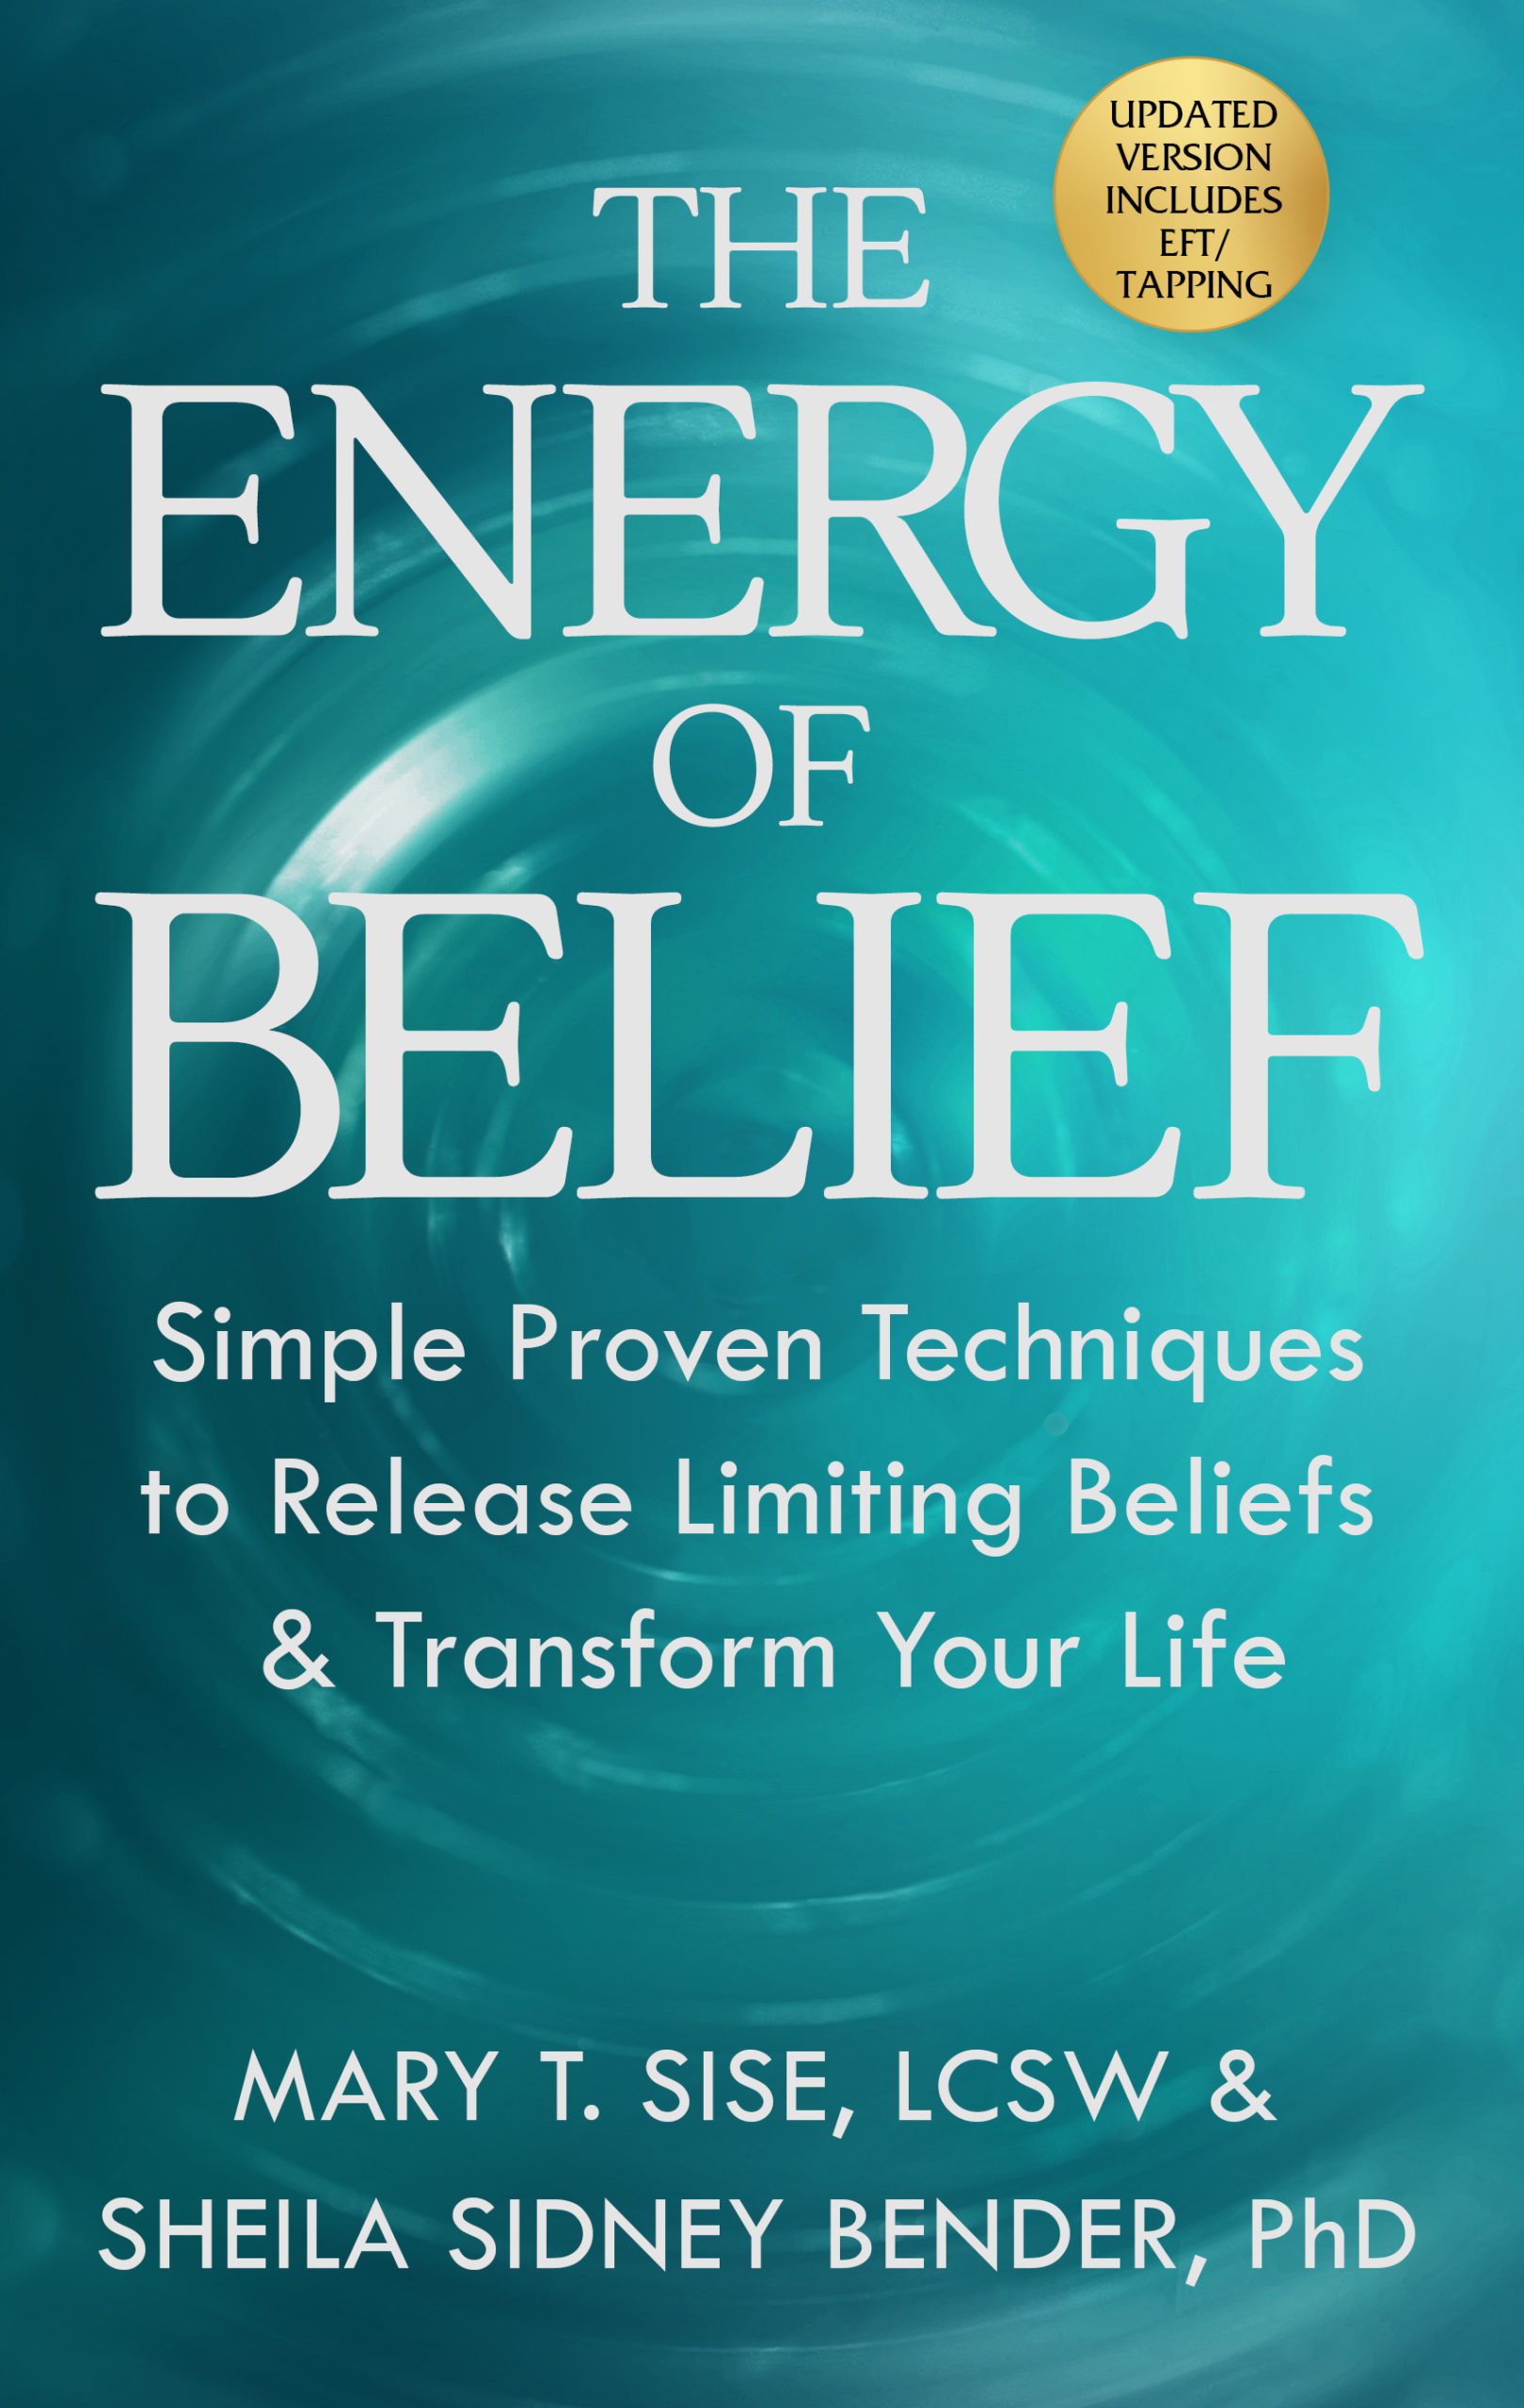 “The Energy of Belief”